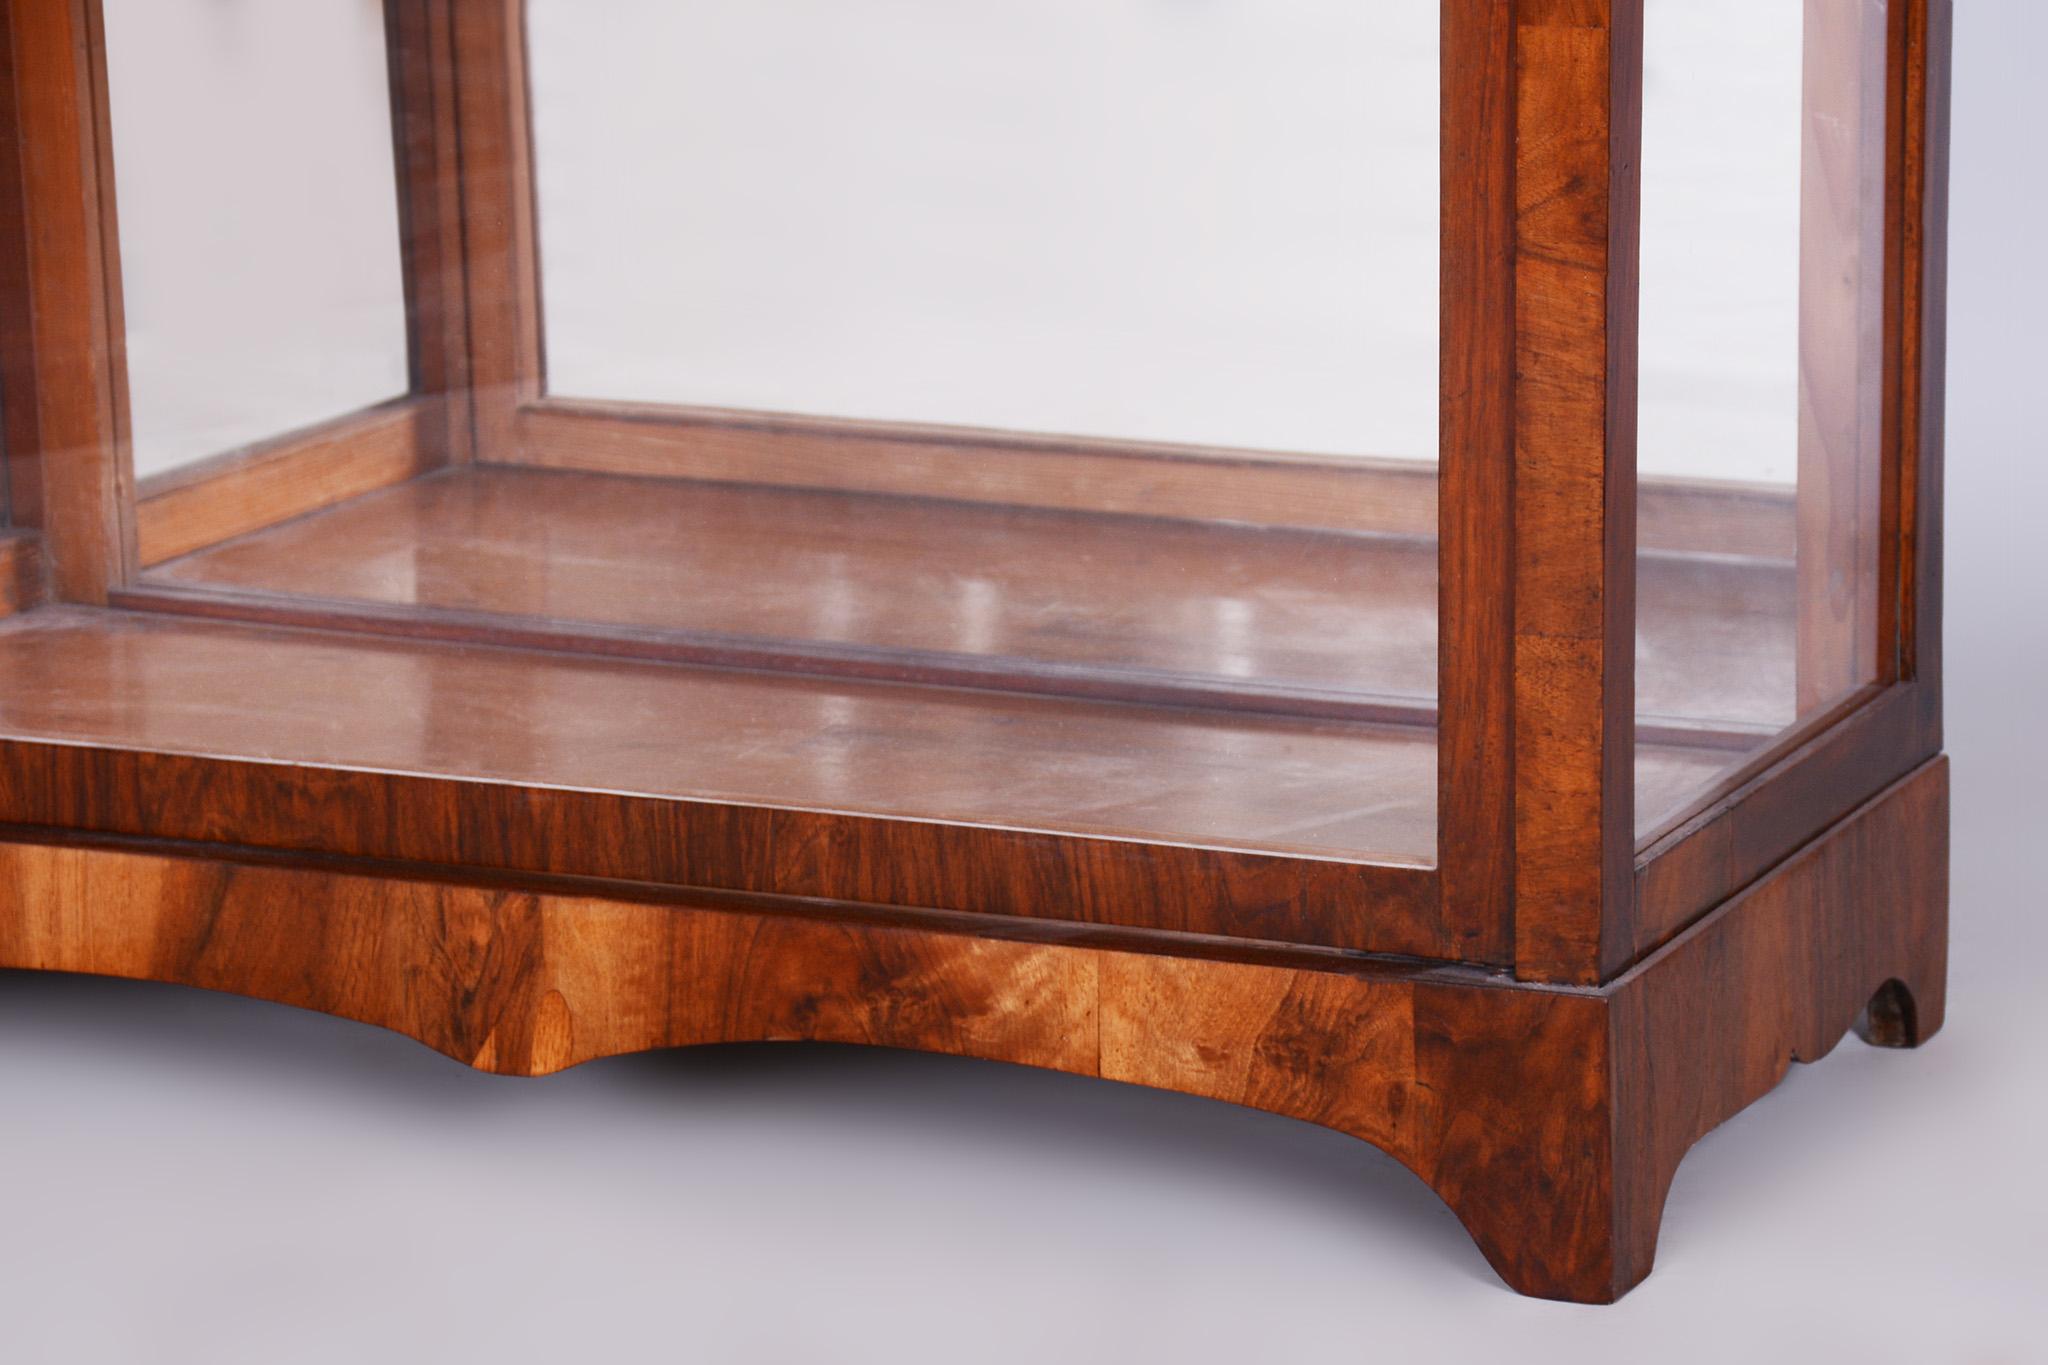 Restored Biedermeier Display Cabinet, Walnut, Solid Spruce, 1830s, Czechia In Good Condition For Sale In Horomerice, CZ